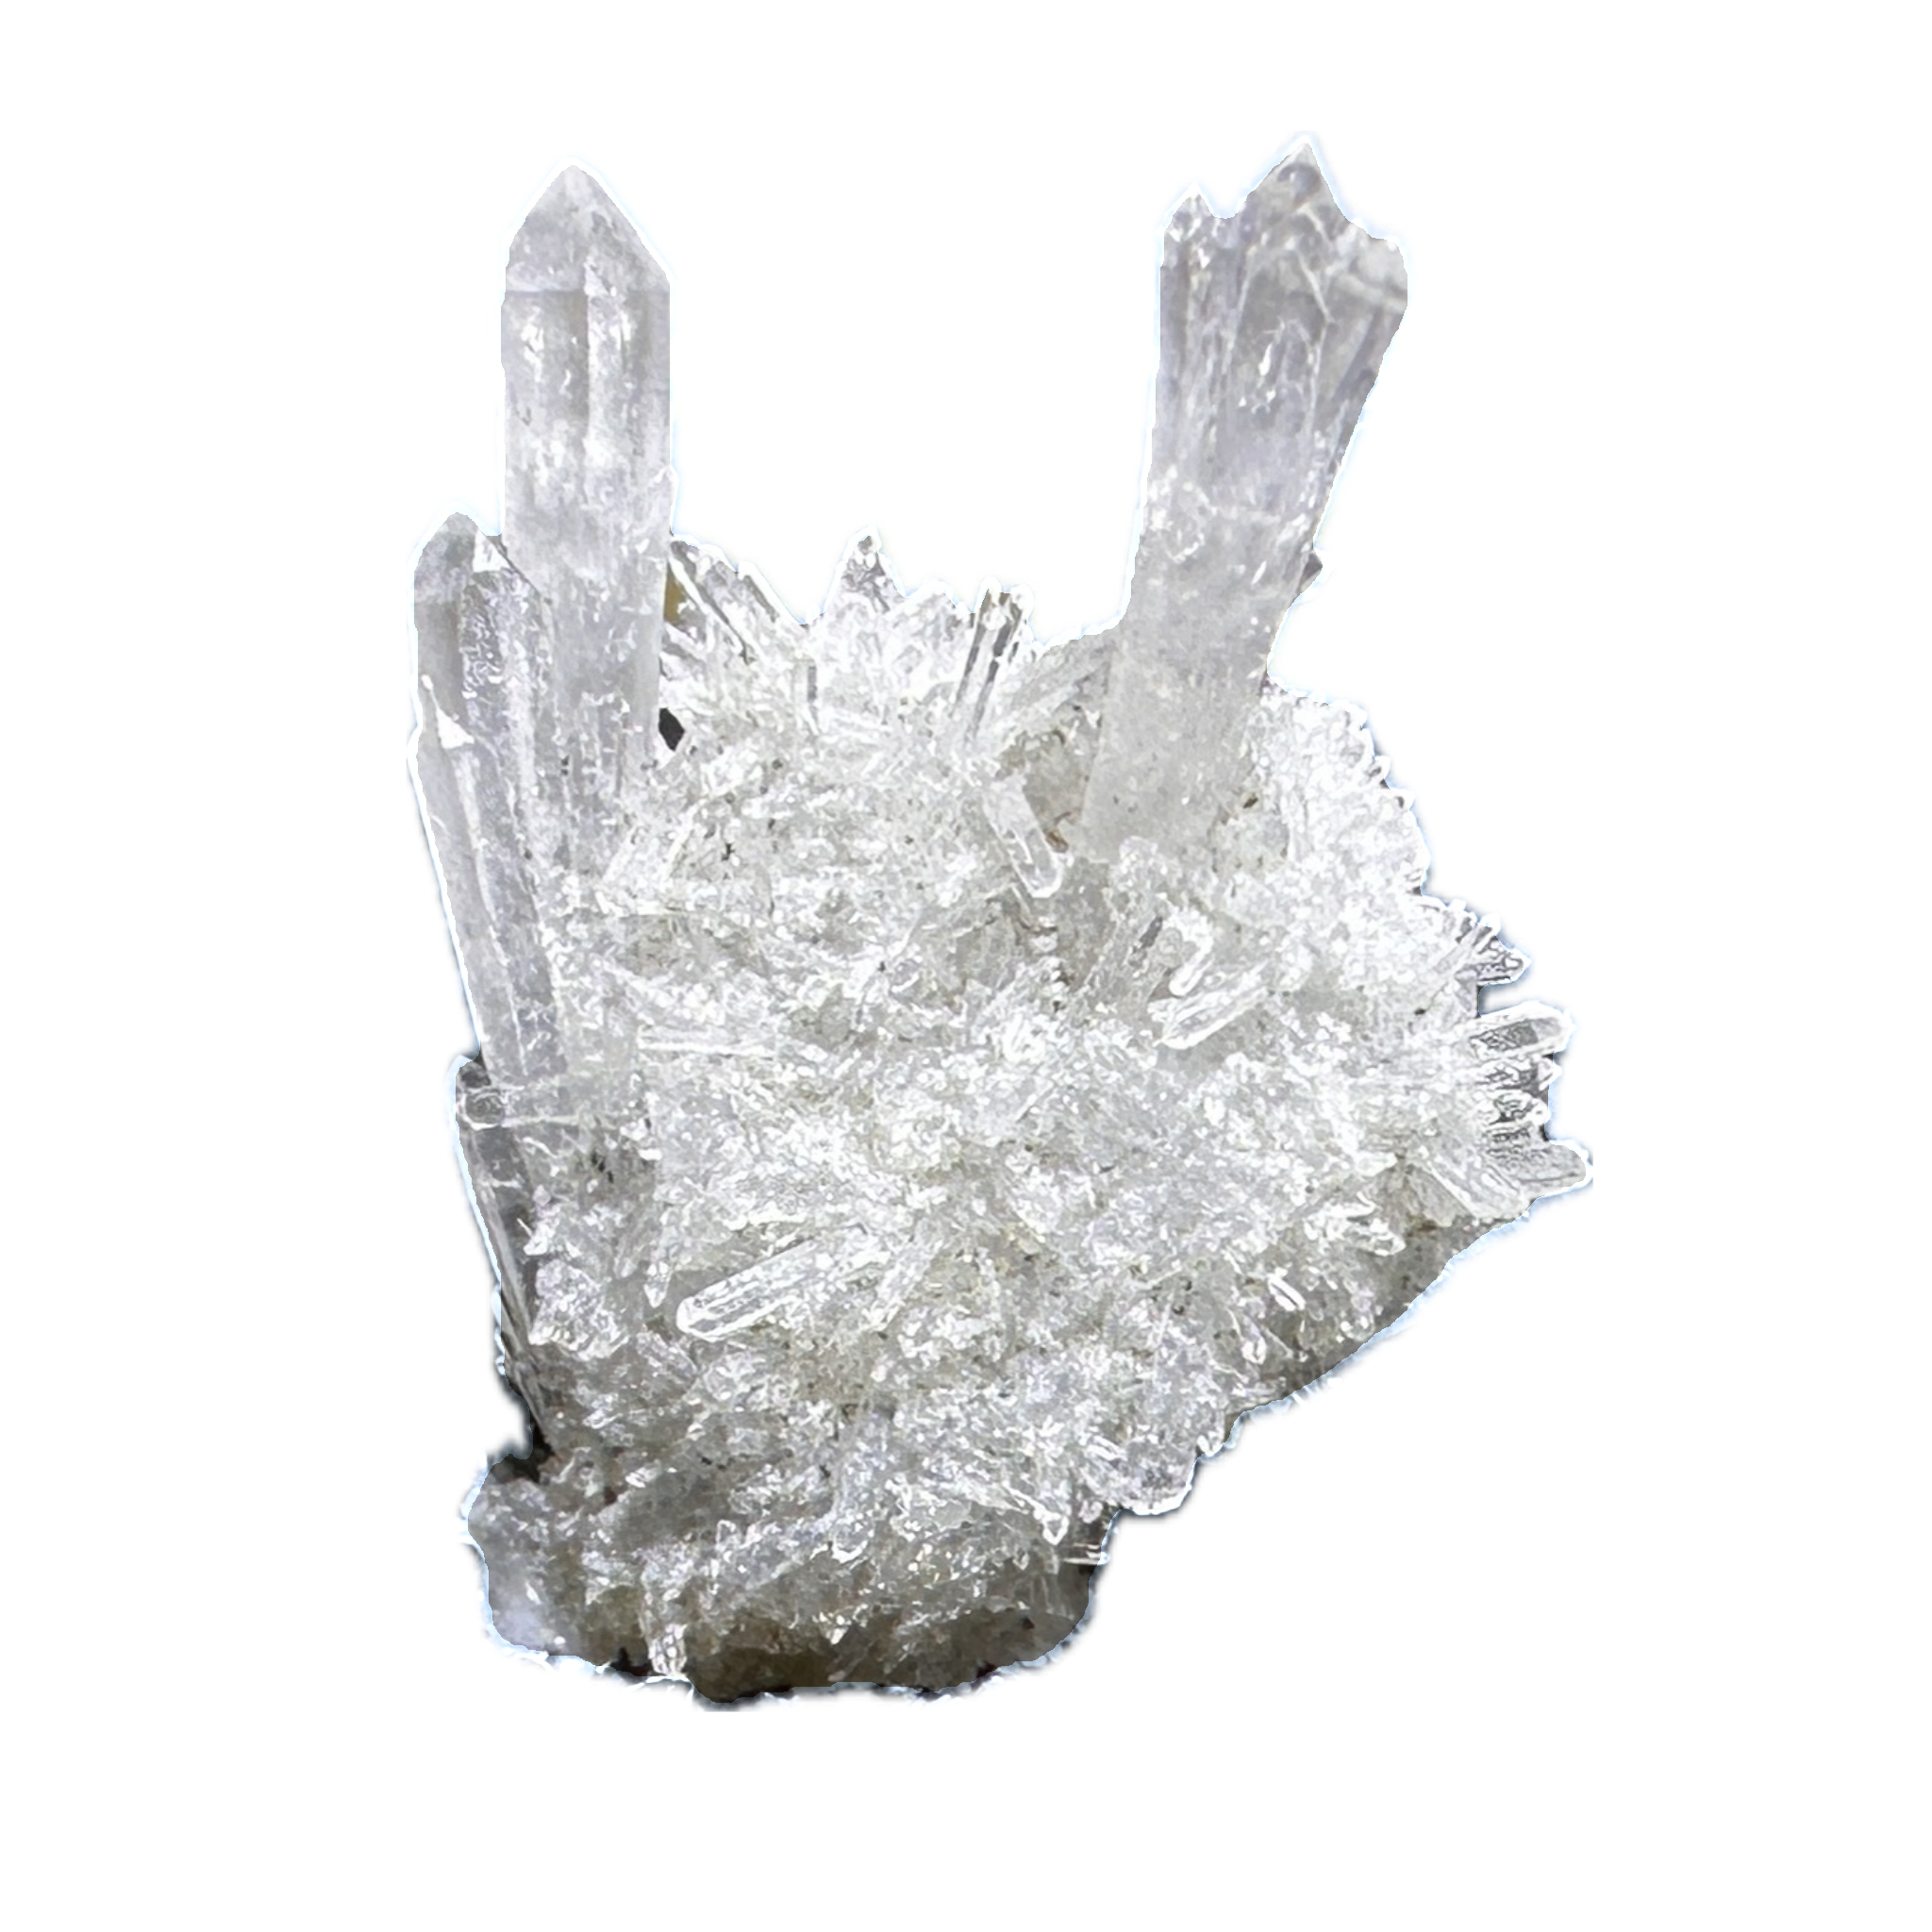 Quartz thumbnail mineral, California Prehistoric Online